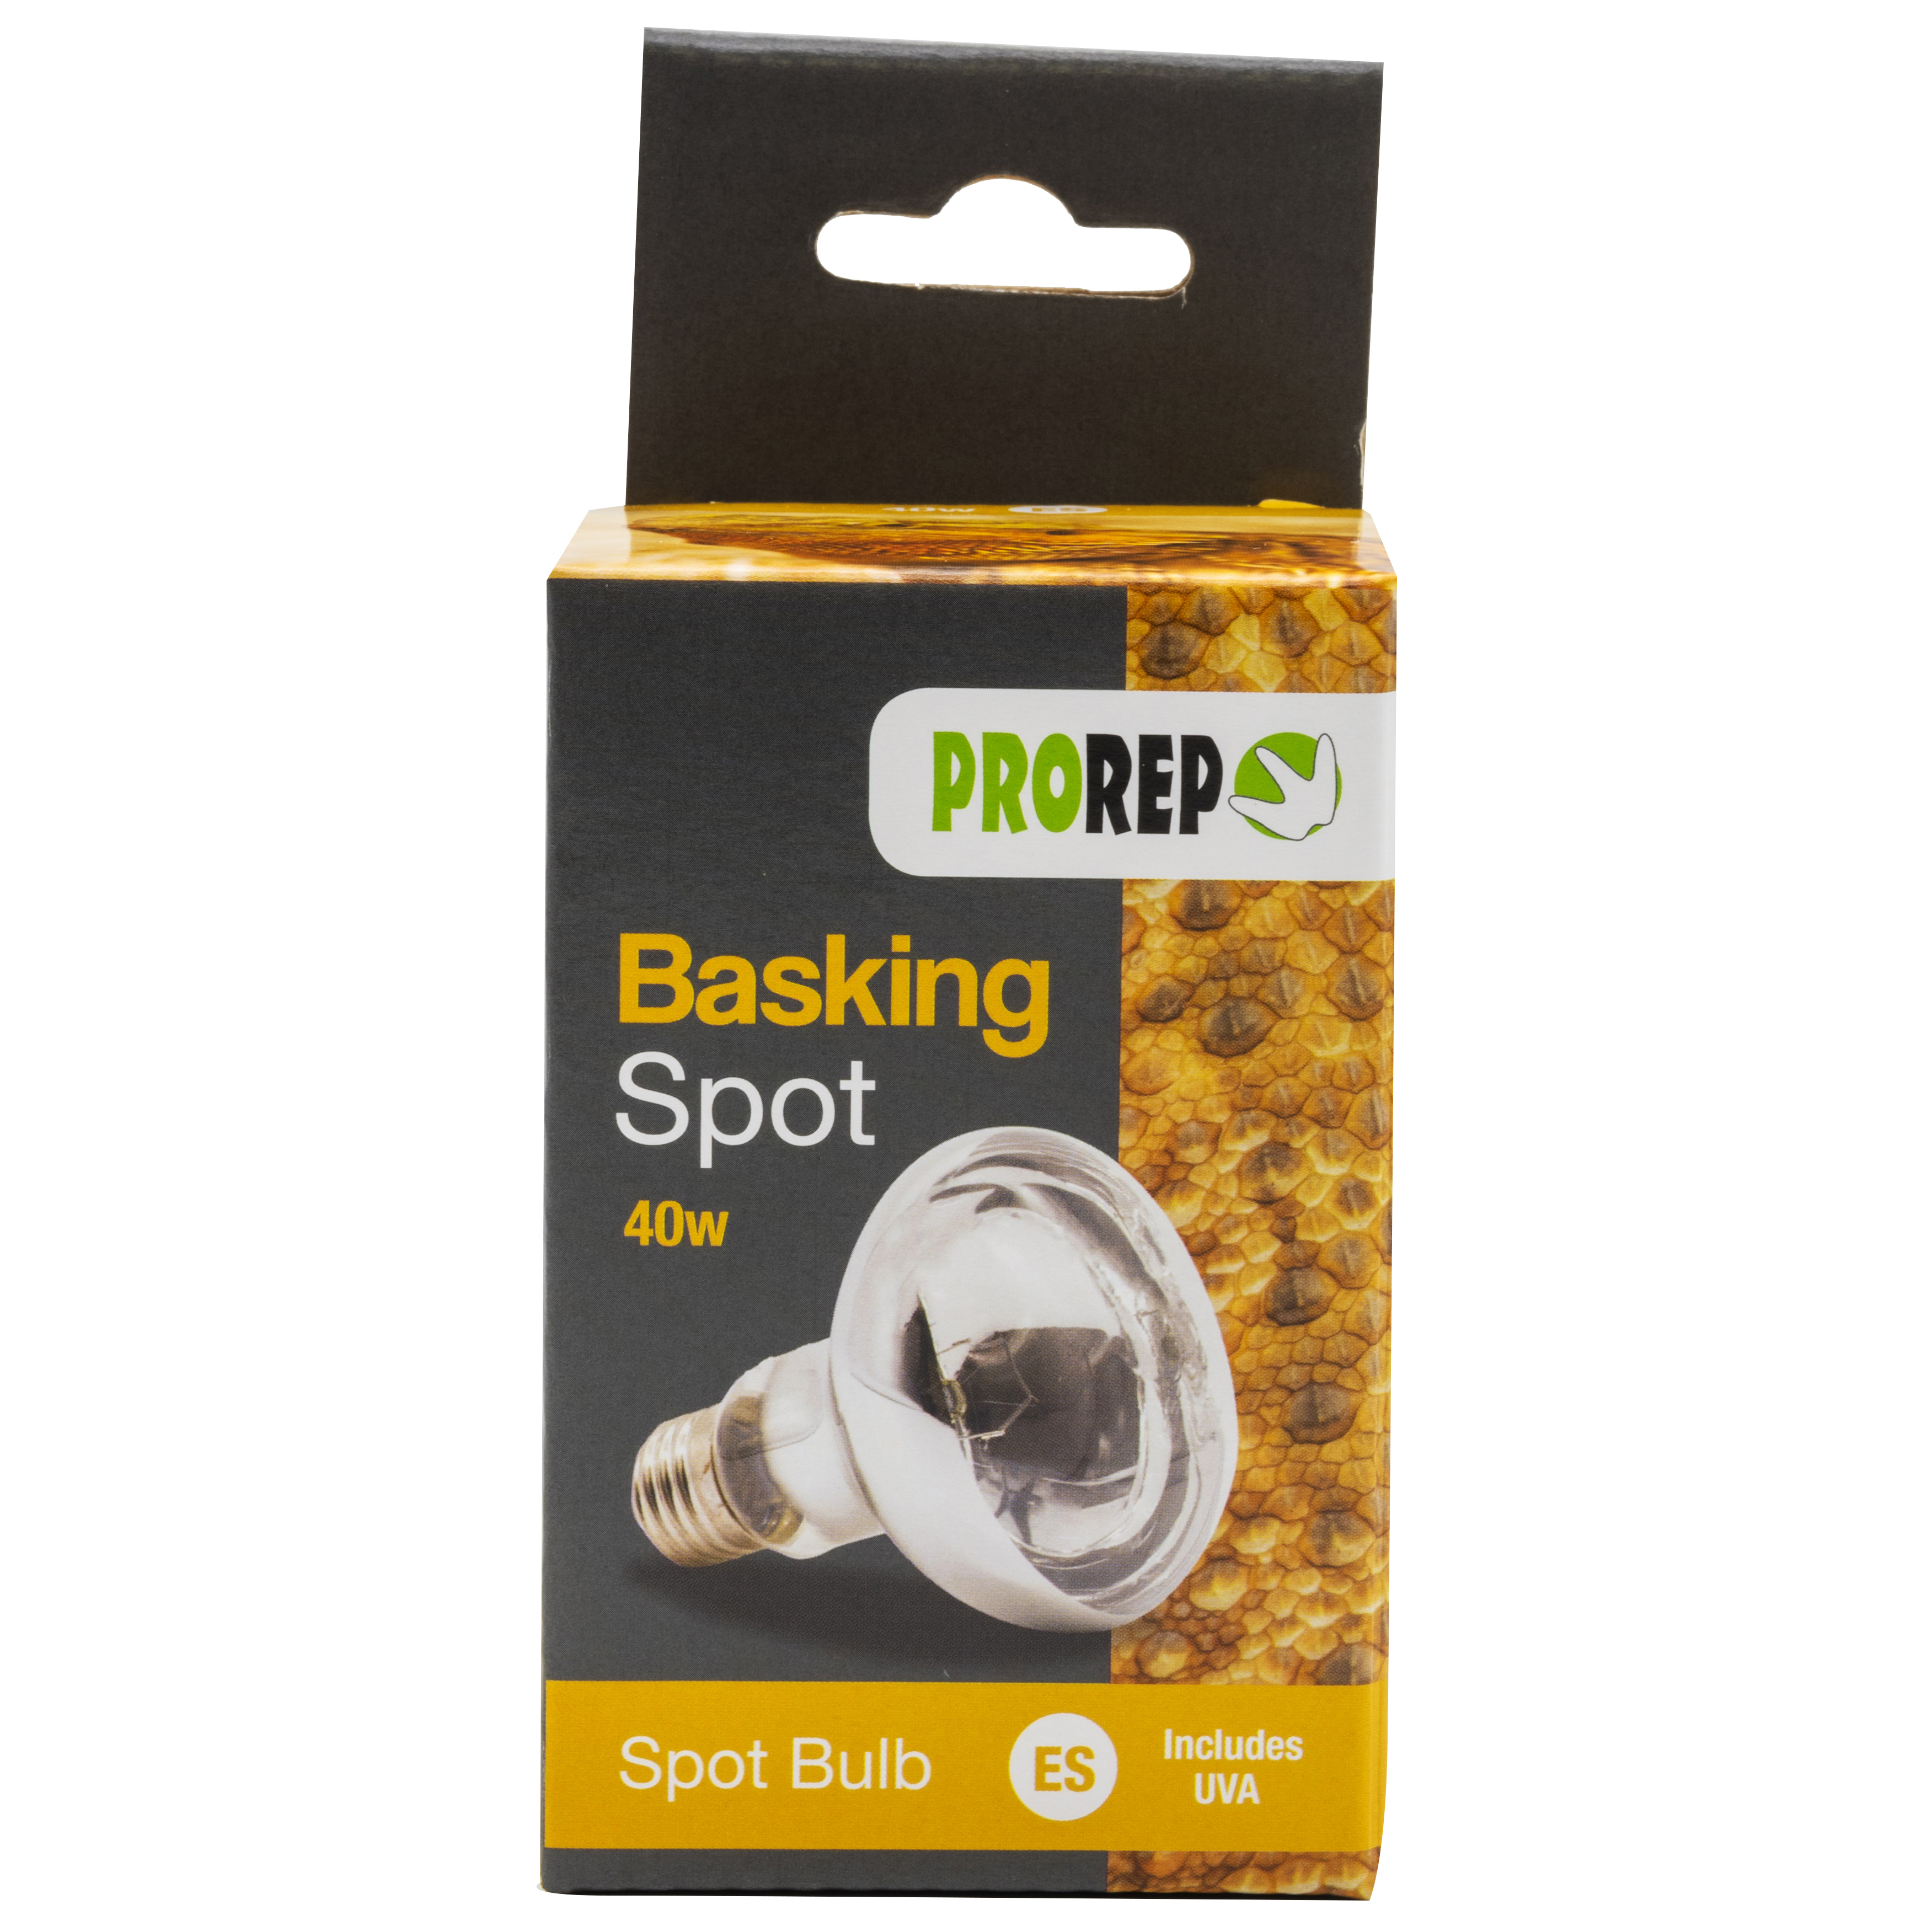 ProRep Basking Spot Lamp 40w ES